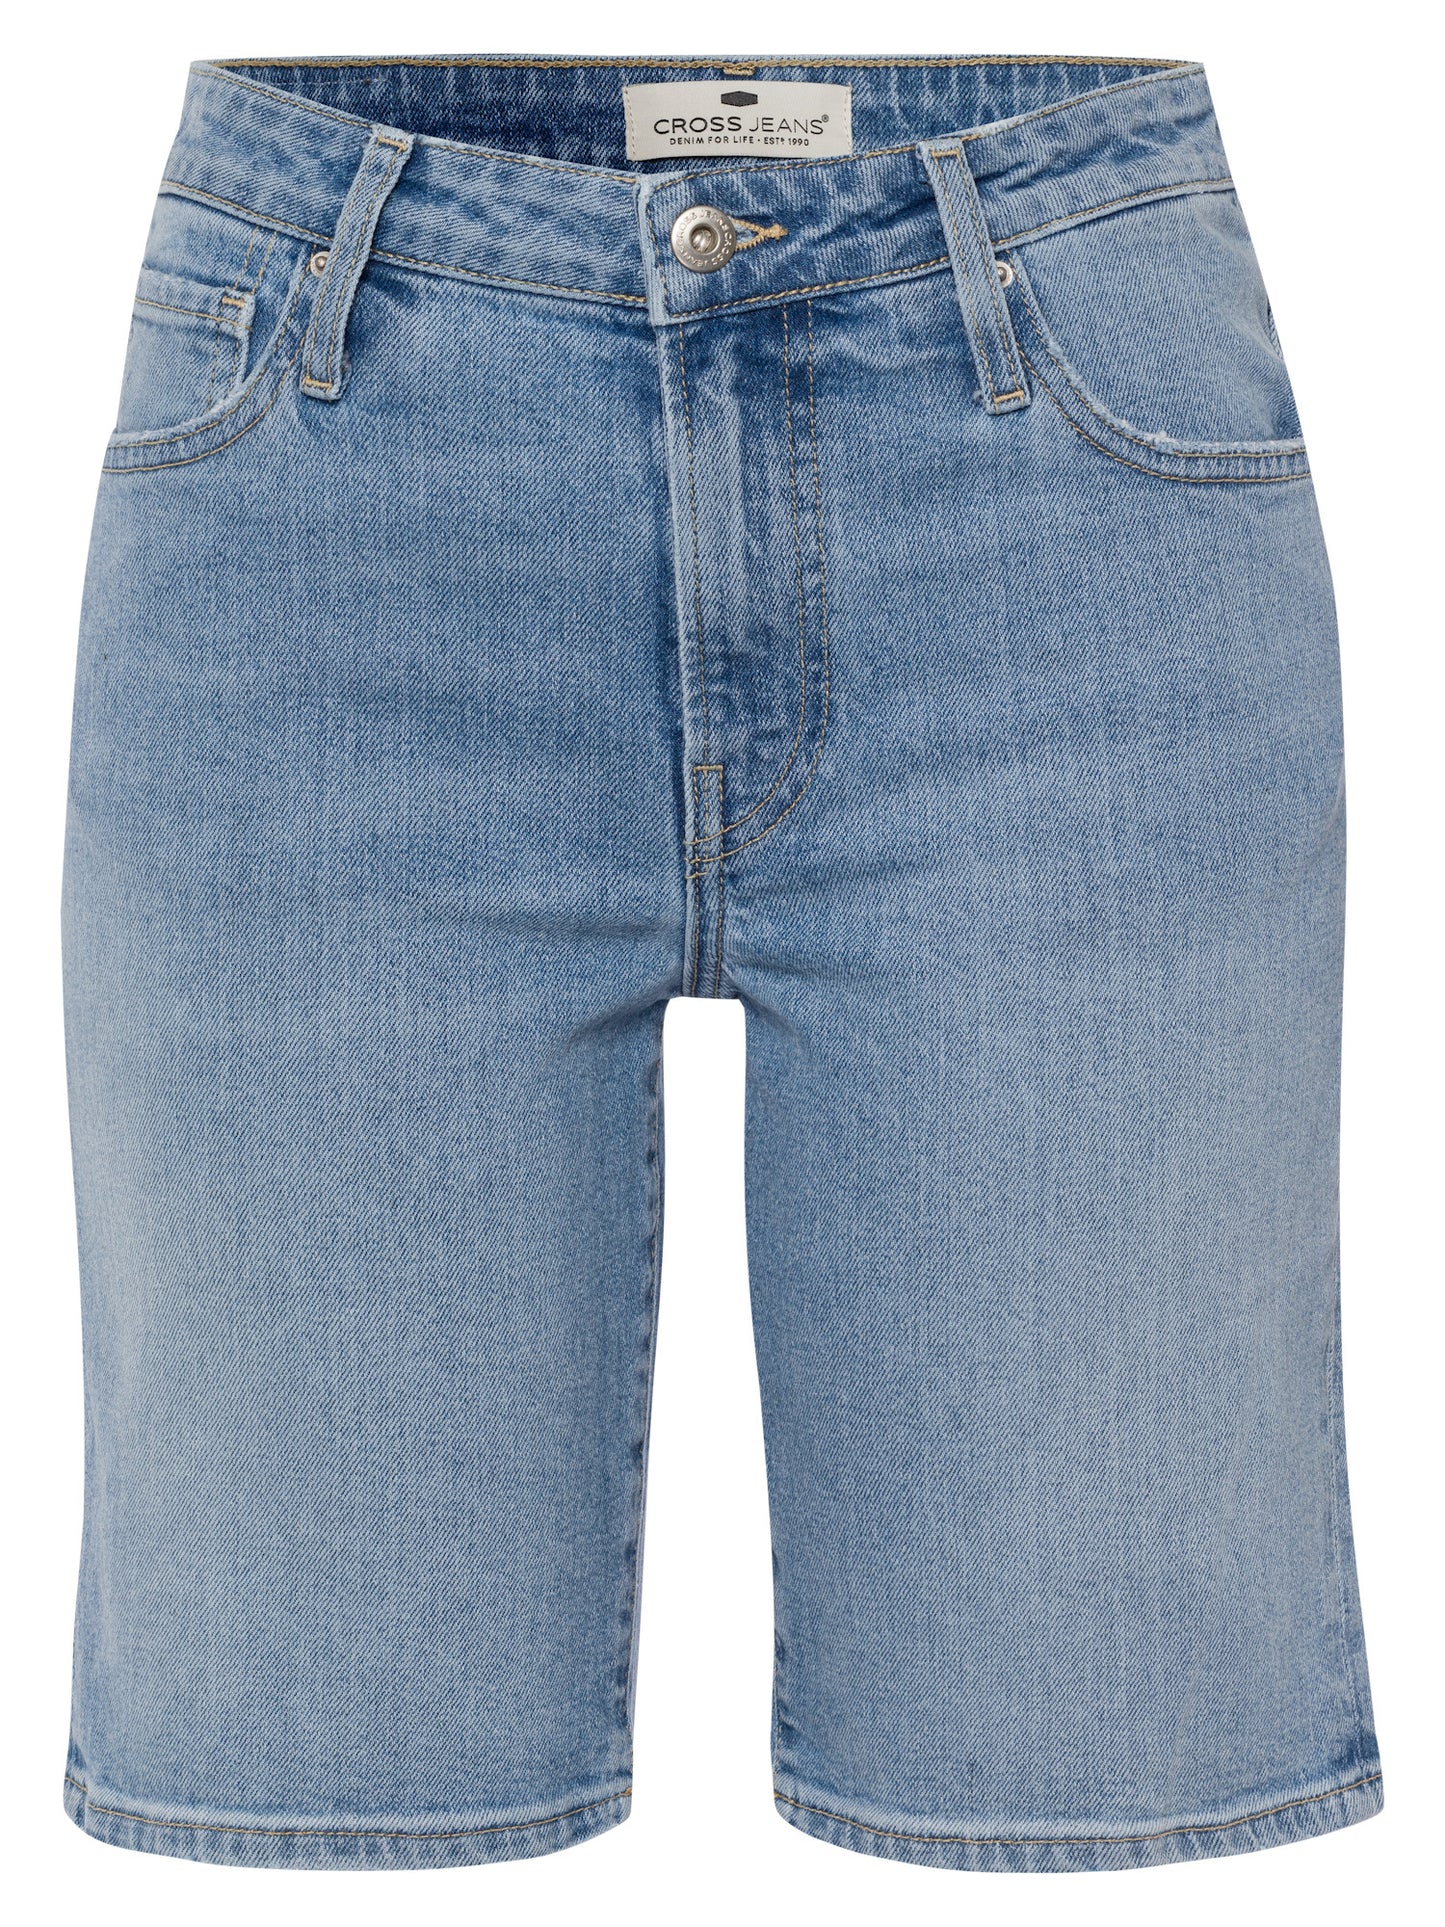 Brooke Damen Jeans-Shorts Mid Waist hell blau